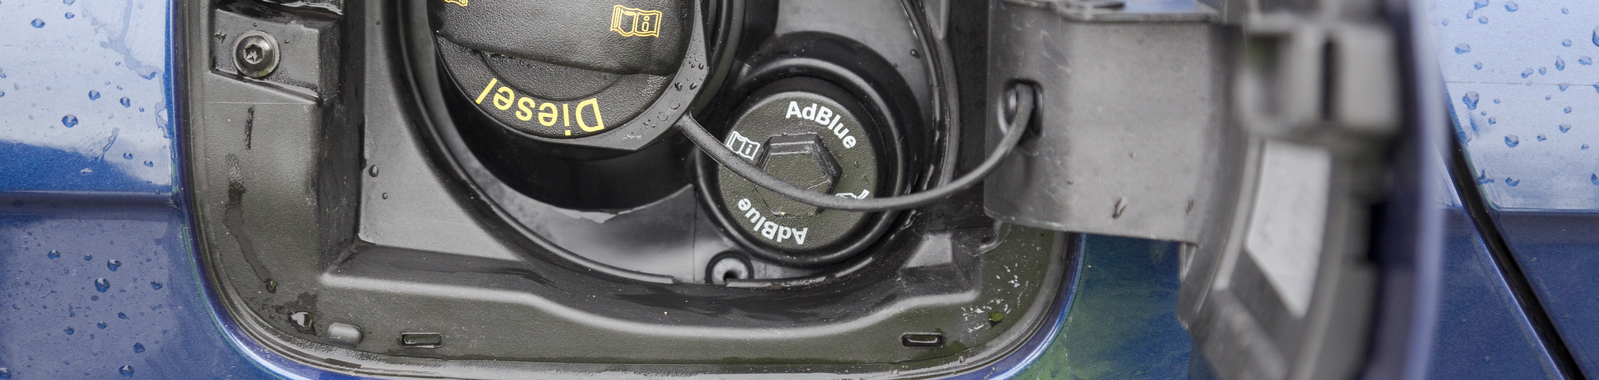 diesel and AdBlue filler cap in car